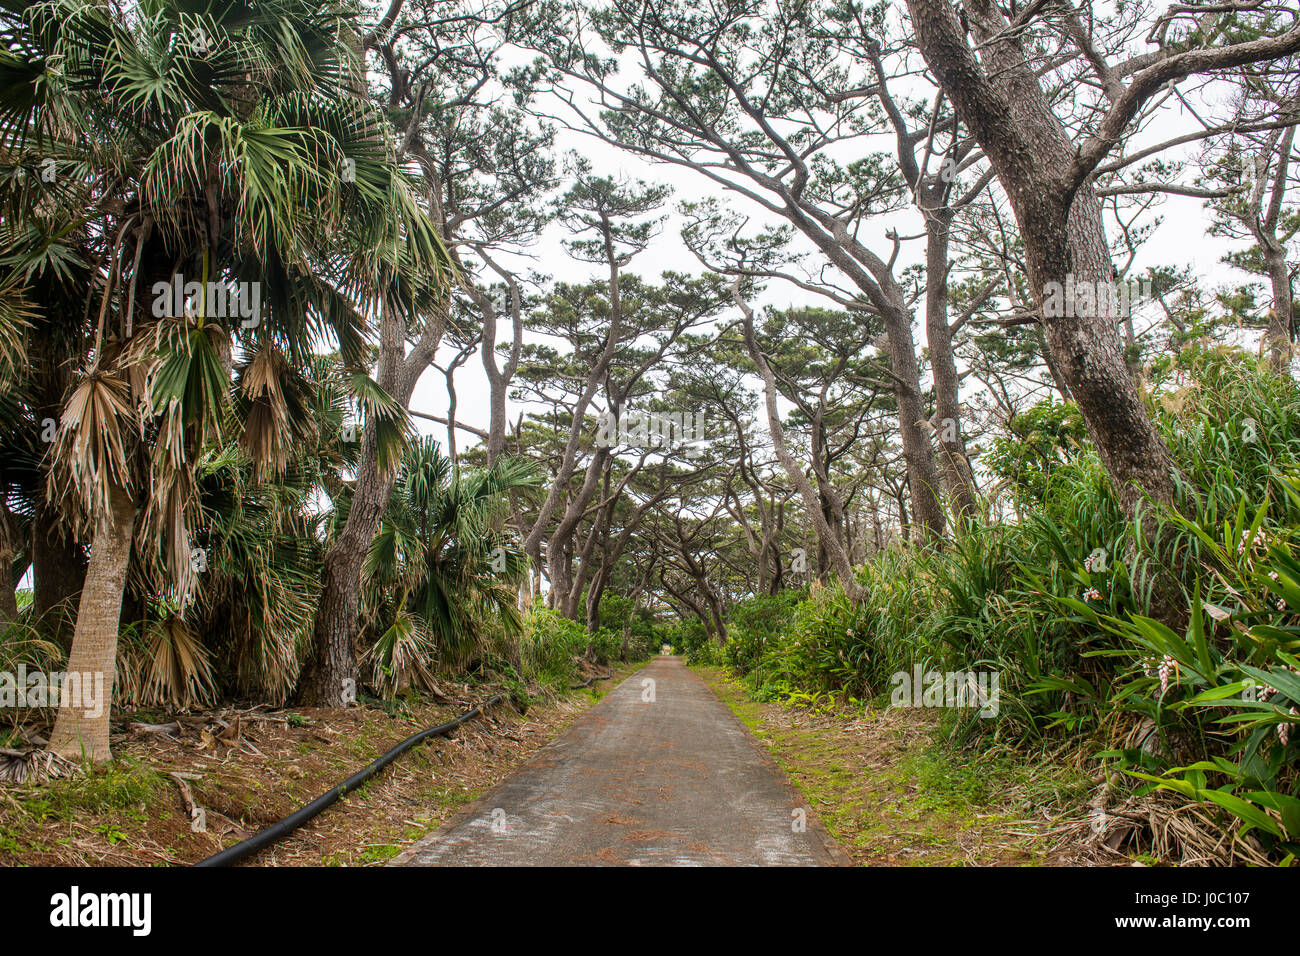 Beautiful road with trees on both sides, Minami Daito, Daito Islands, Japan, Asia Stock Photo